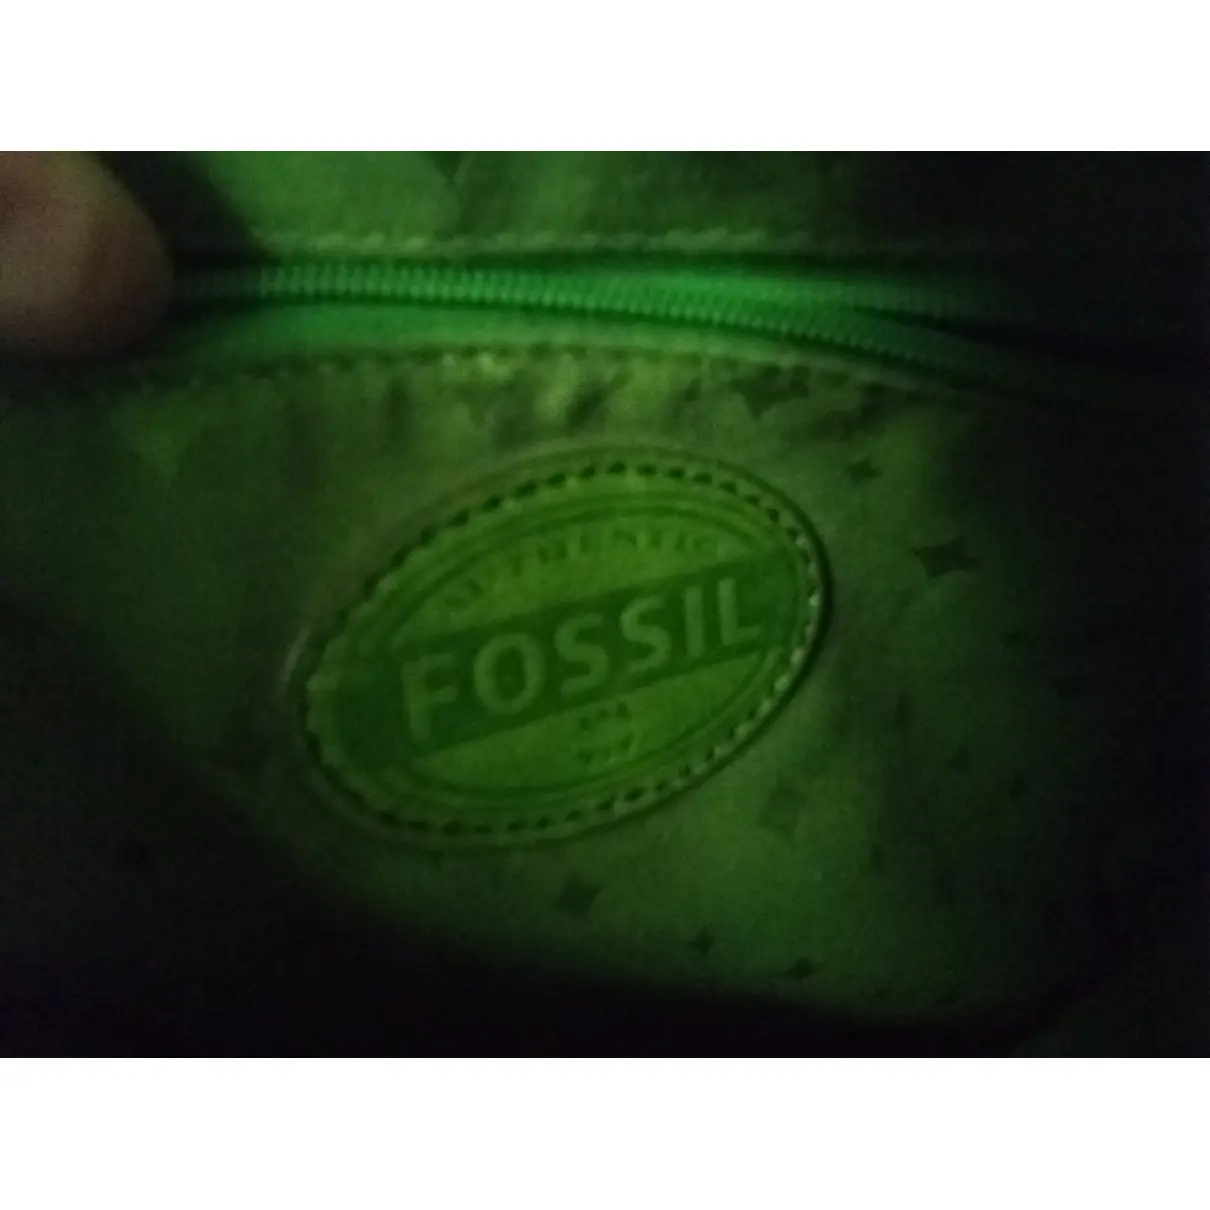 Leather crossbody bag Fossil